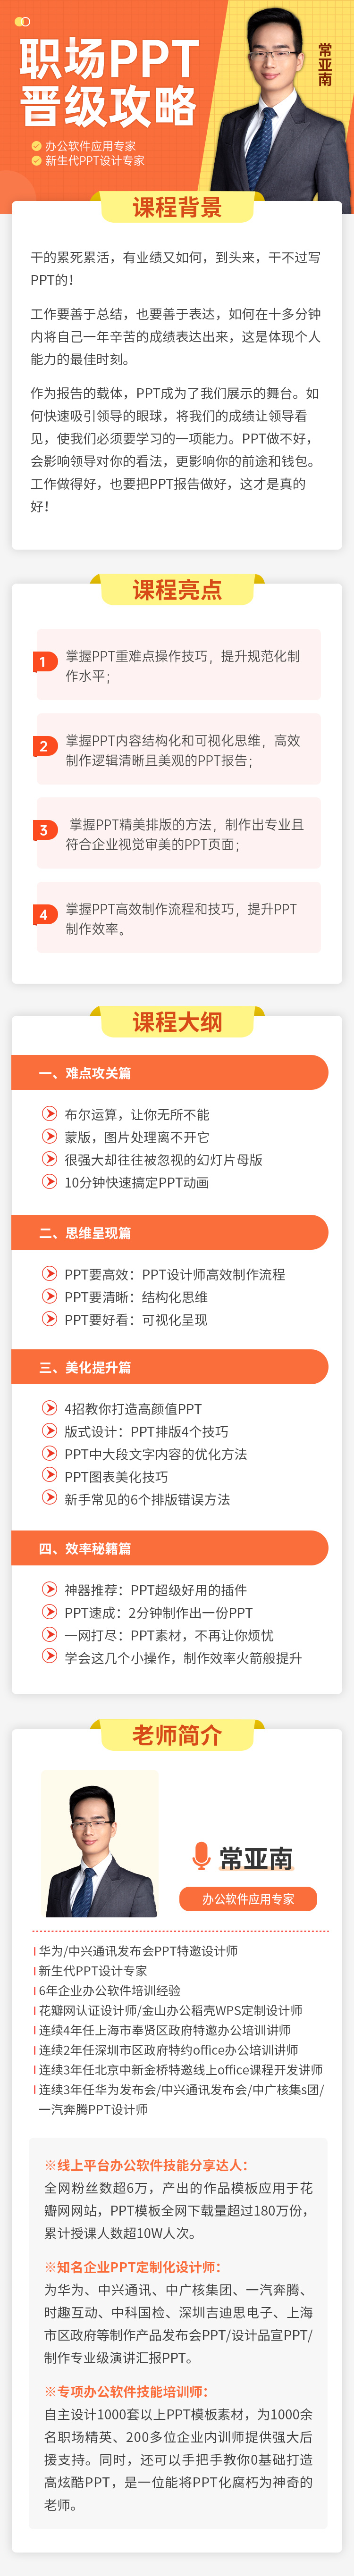 https://ksb-1253359580.cos.ap-guangzhou.myqcloud.com/newhdp%2Flive_cover%2F6326%2F6139%2F512b4947e00a045f050a9b821d8a1647.jpeg